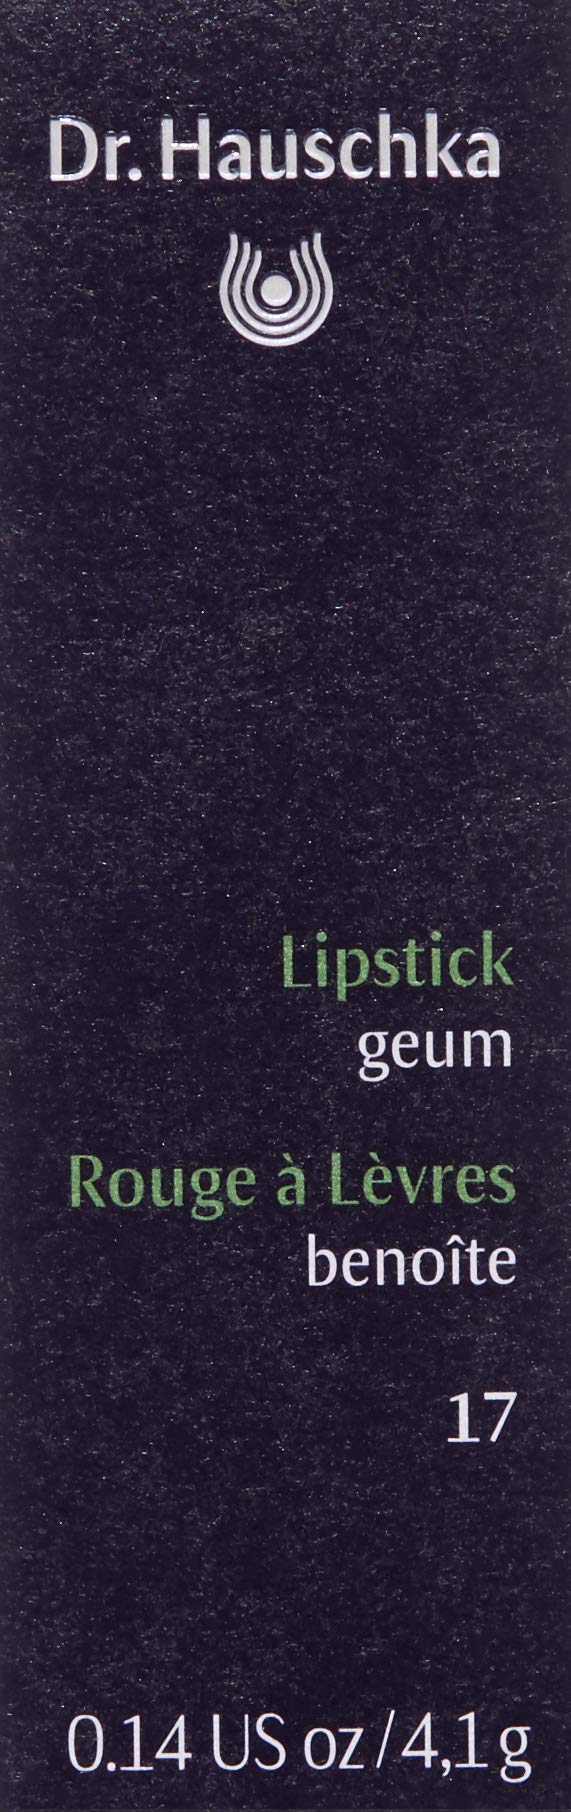 [Australia] - Dr. Hauska Lipstick 17 geum 